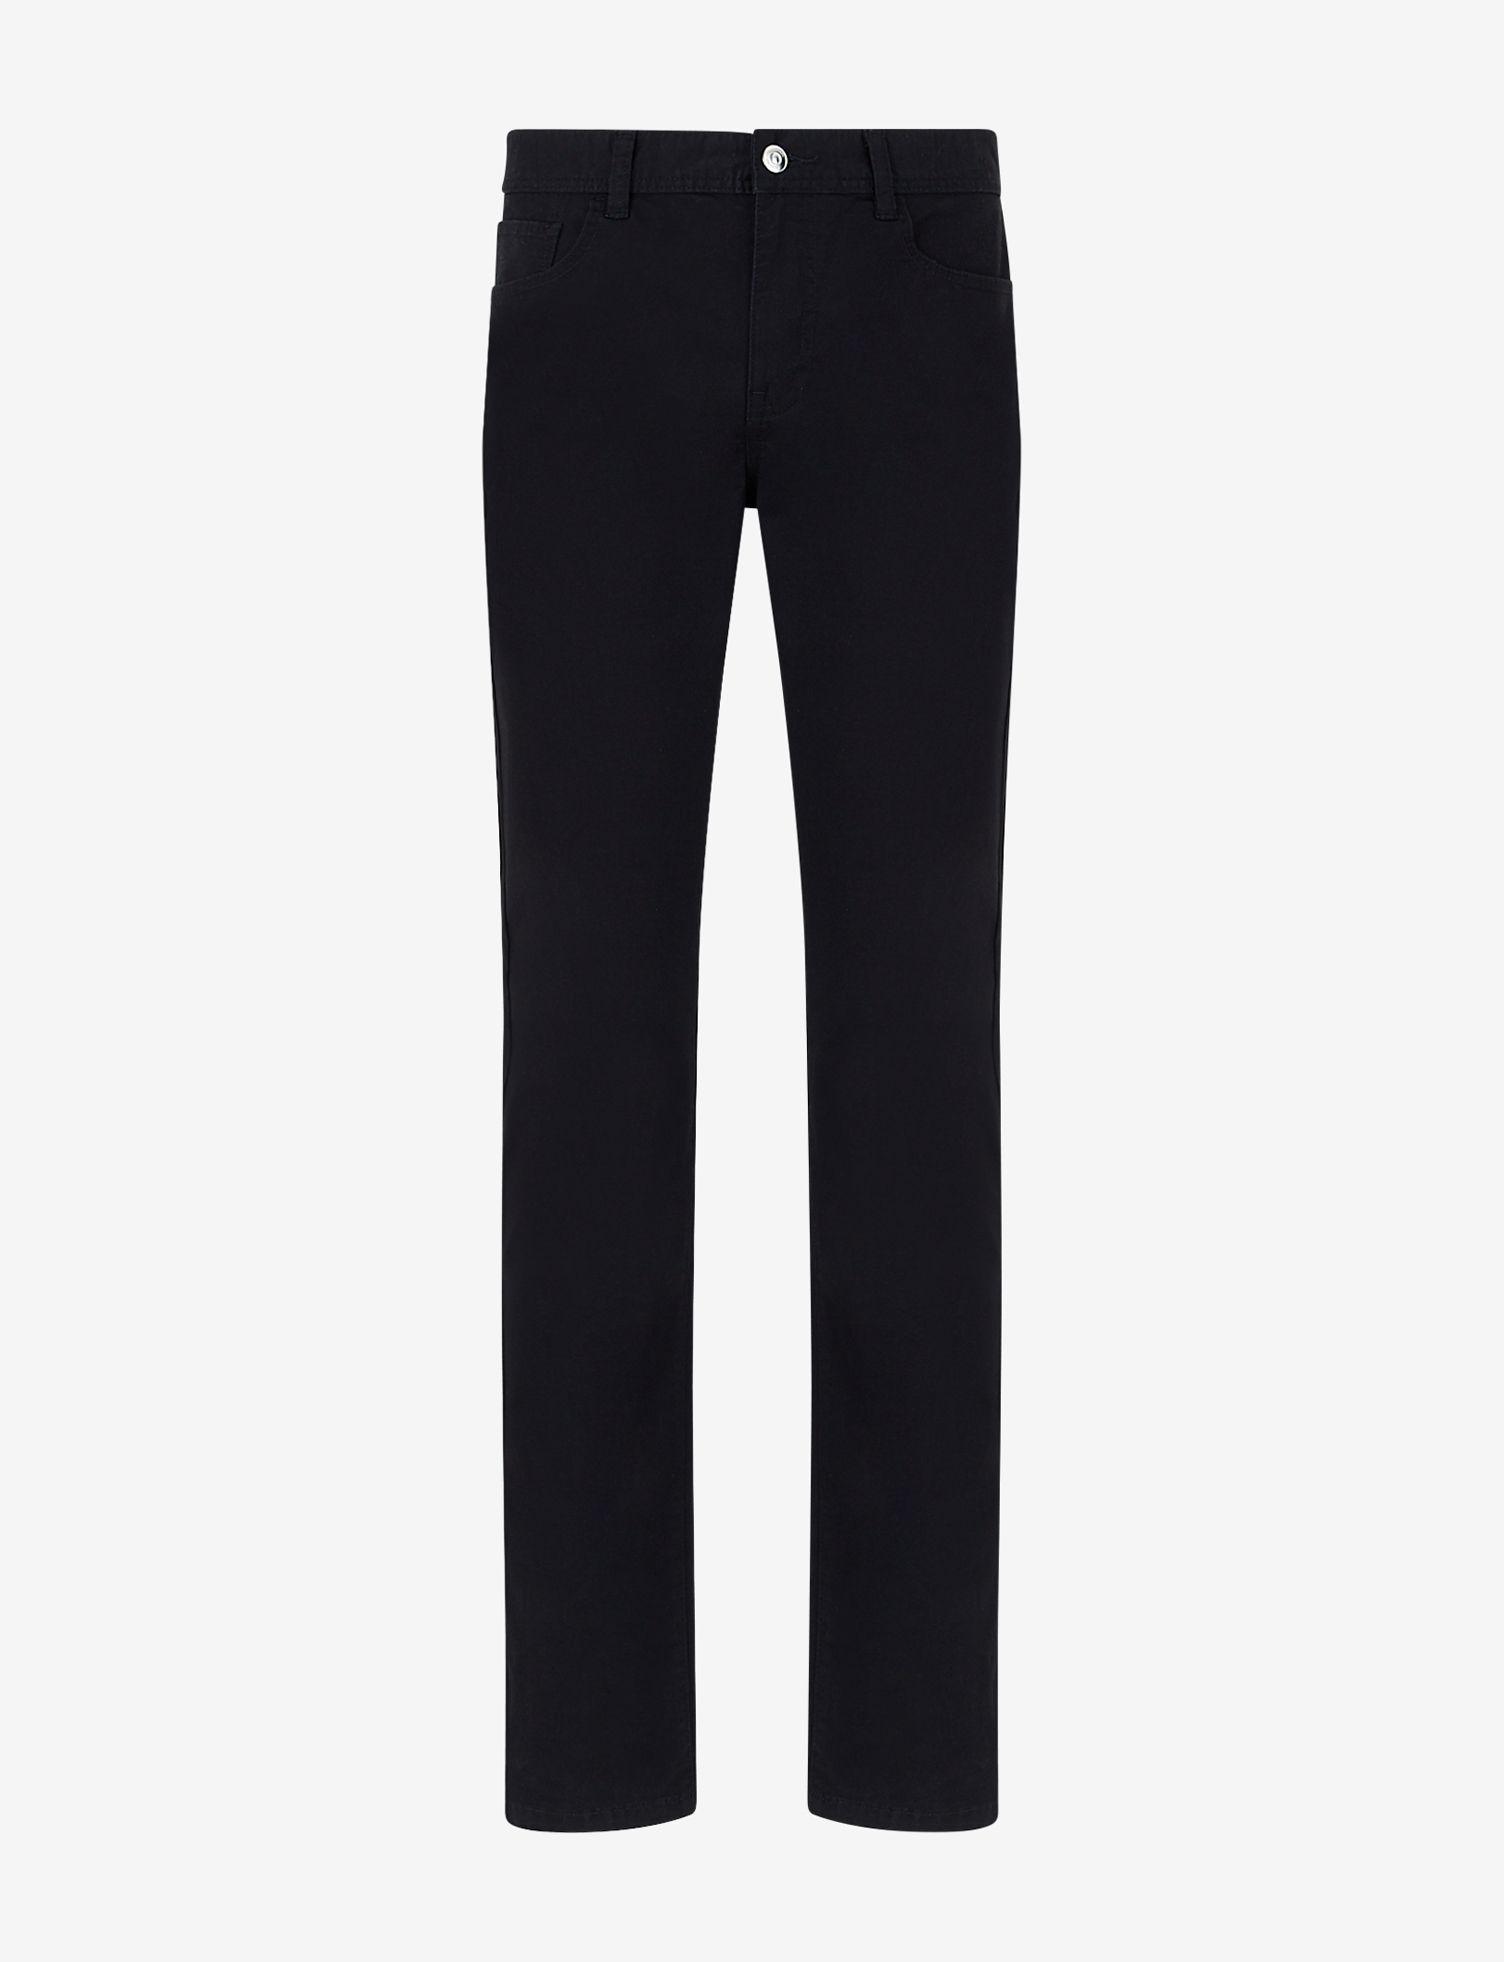 Armani Exchange Denim J16 Straight-cut Jeans in Black for Men - Lyst